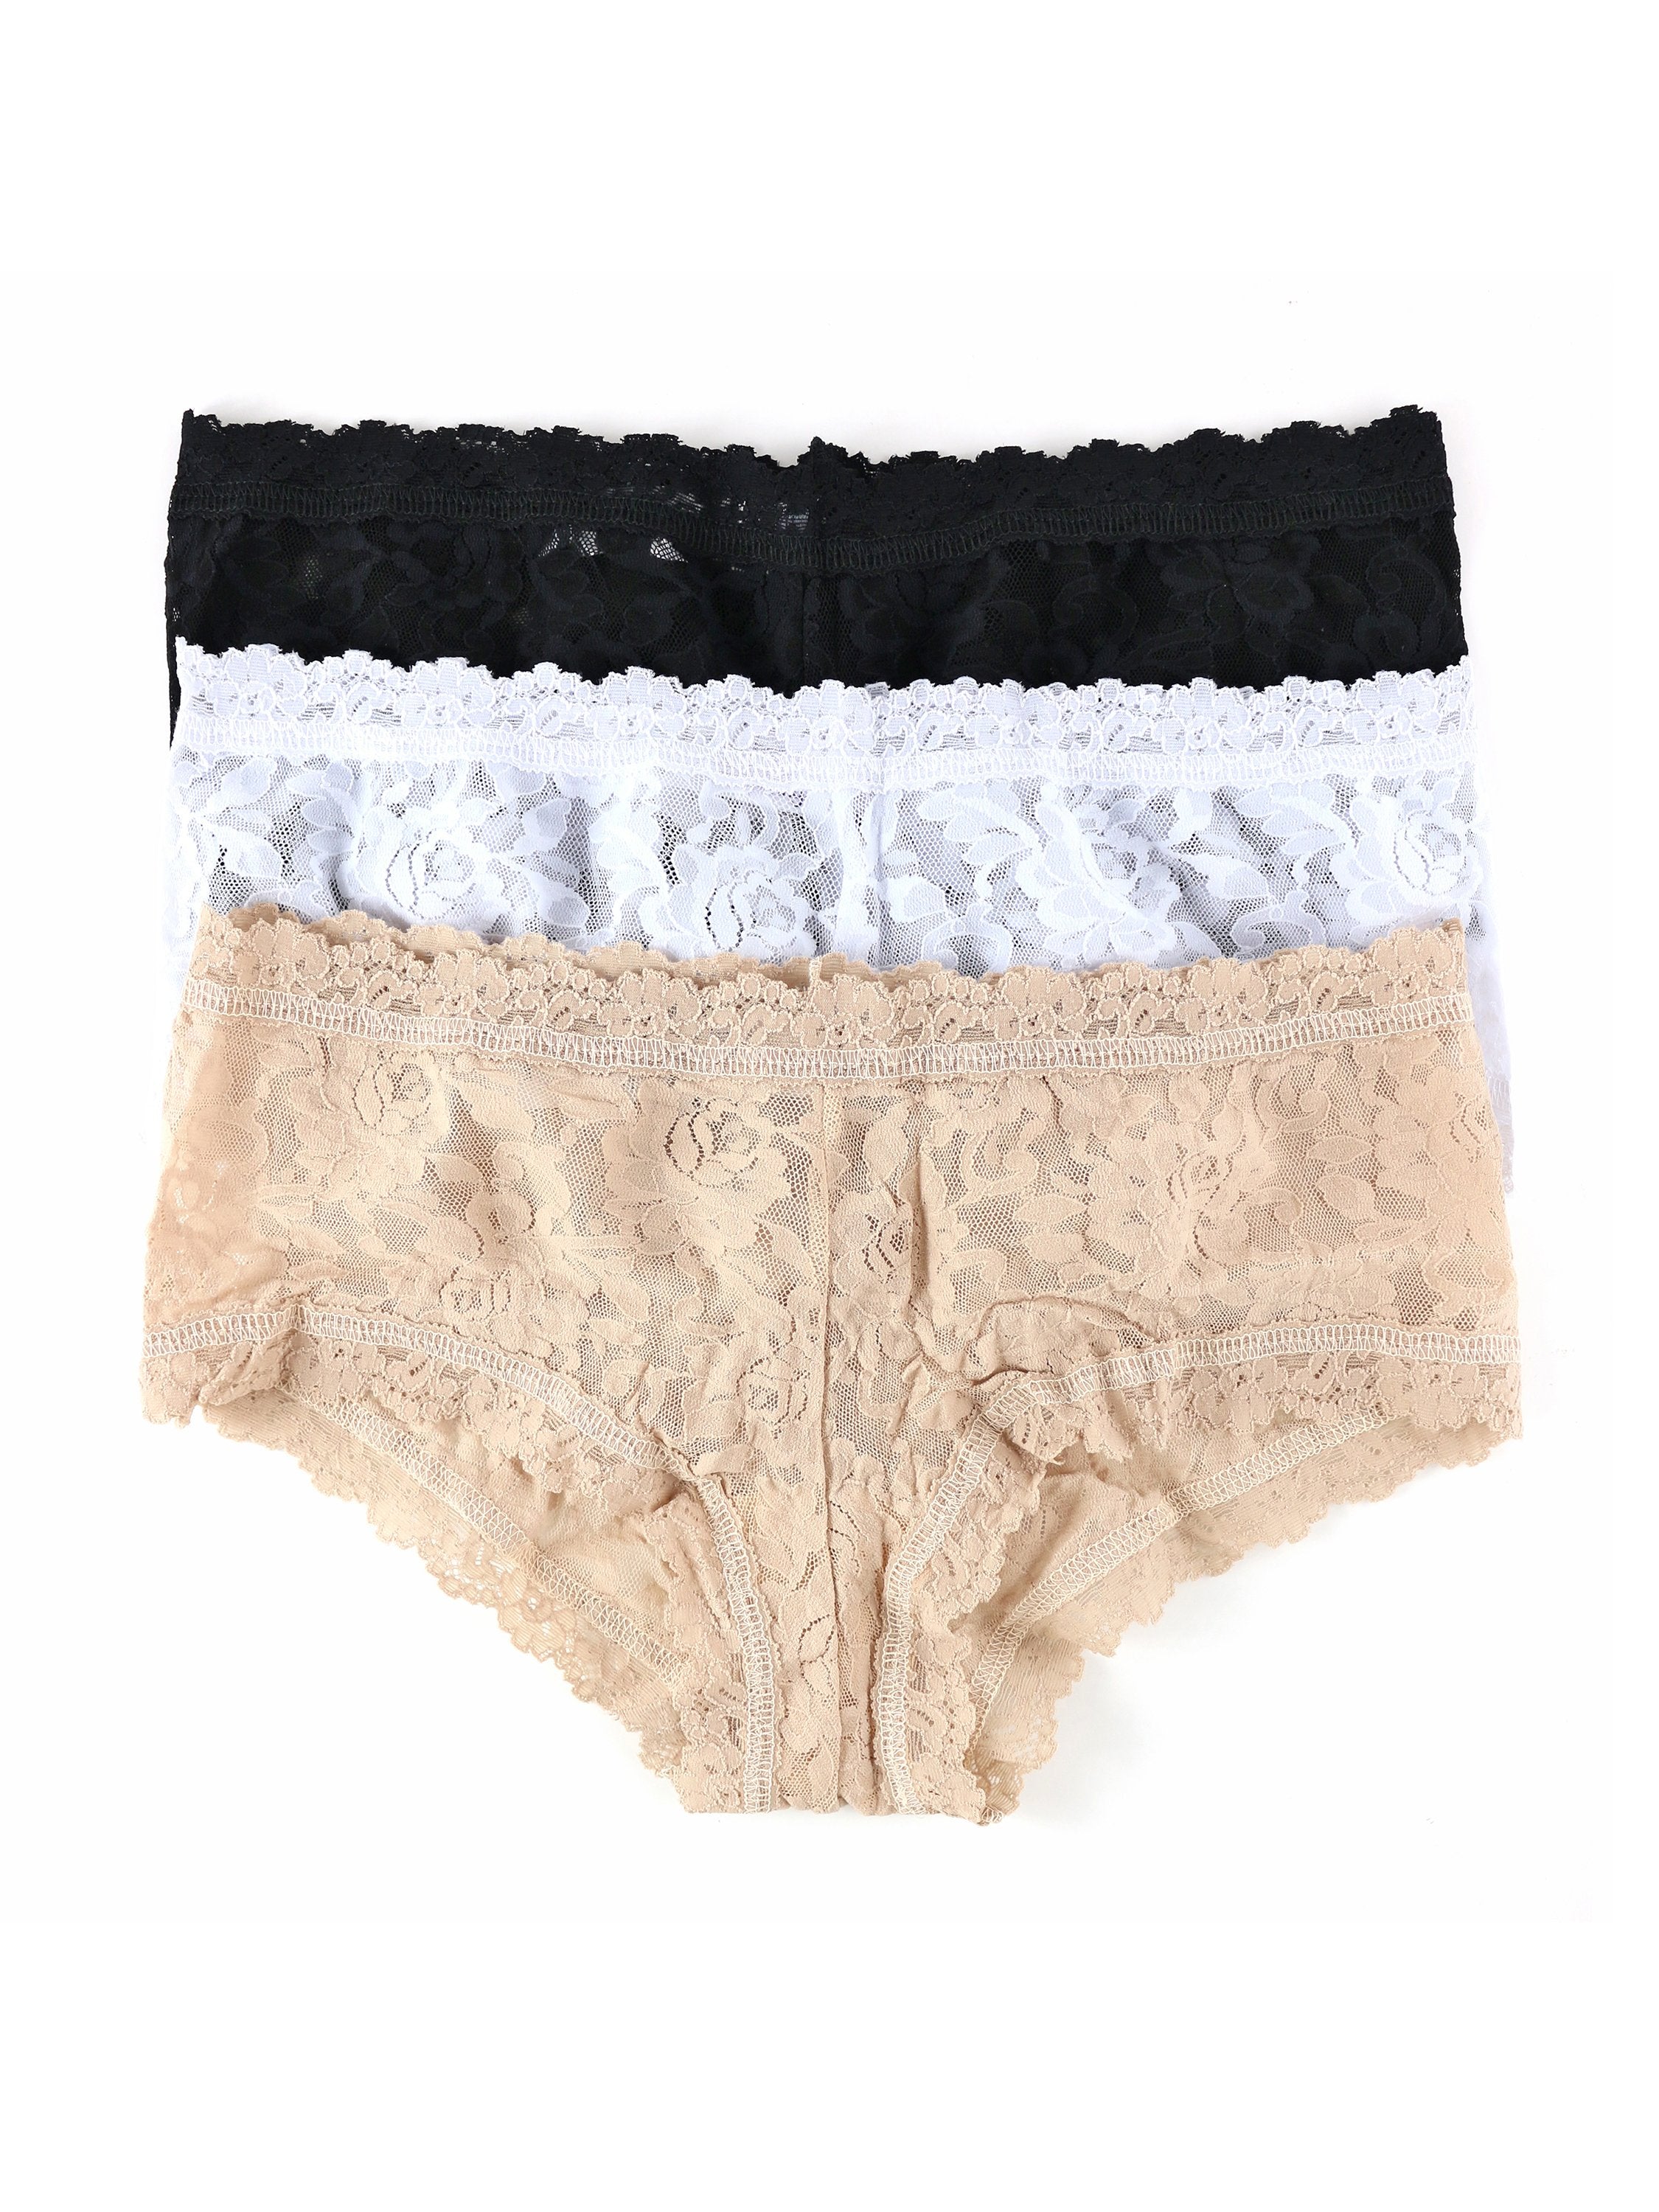 Hanky Panky A5845 Pink Signature Lace Boyshorts Panty Women's Underwear Size  M